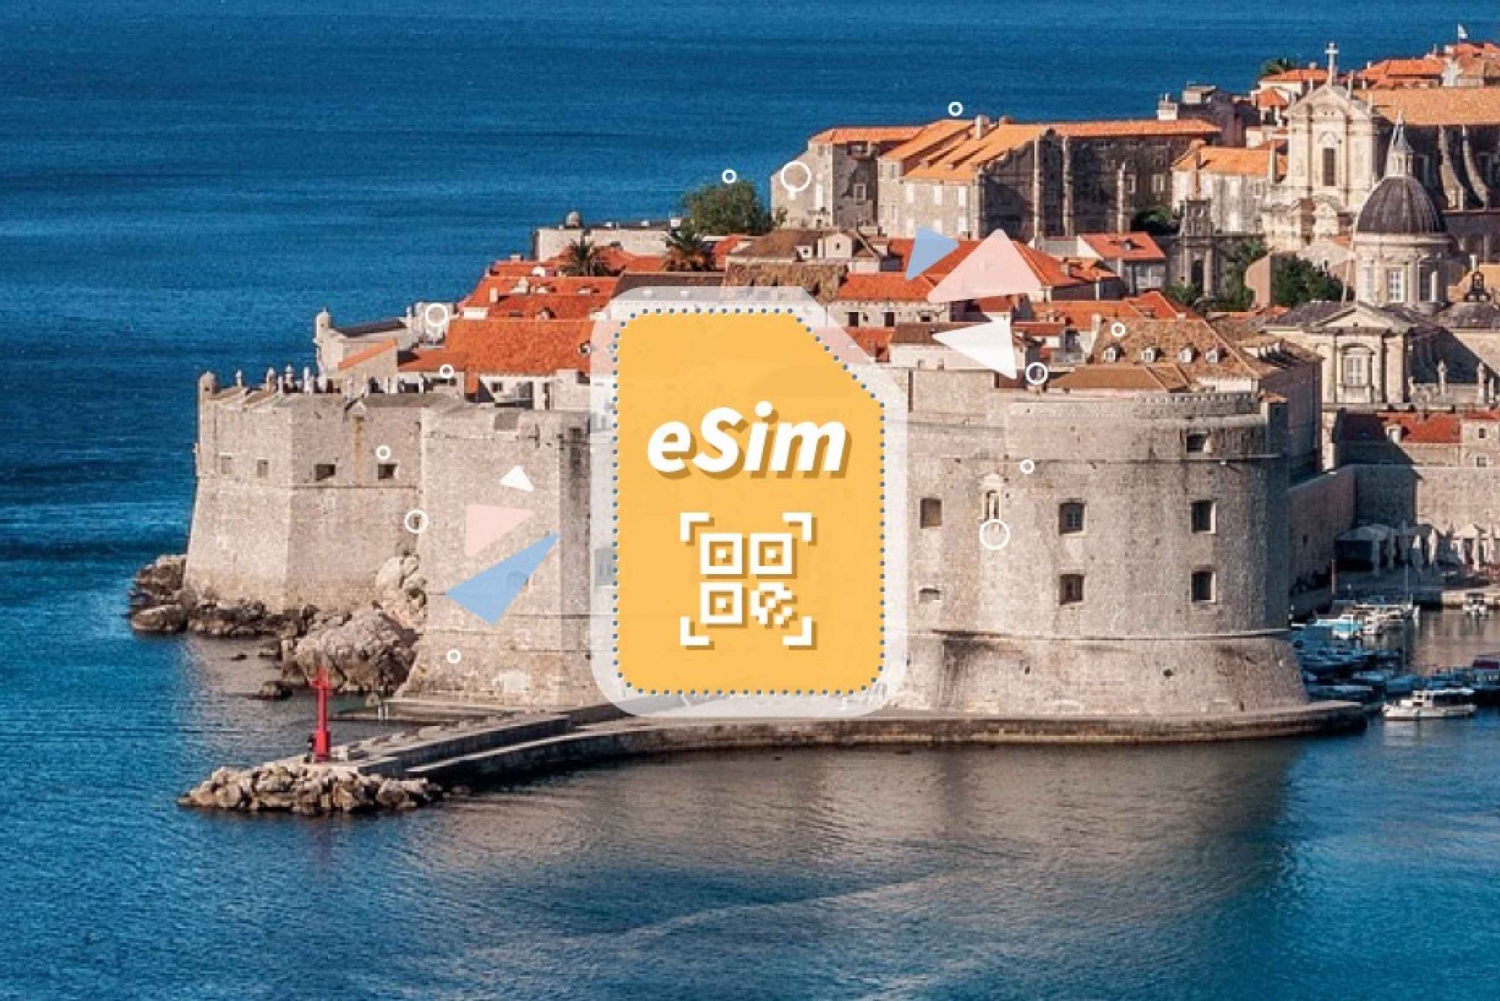 Croatia/Europe: eSim Mobile Data Plan